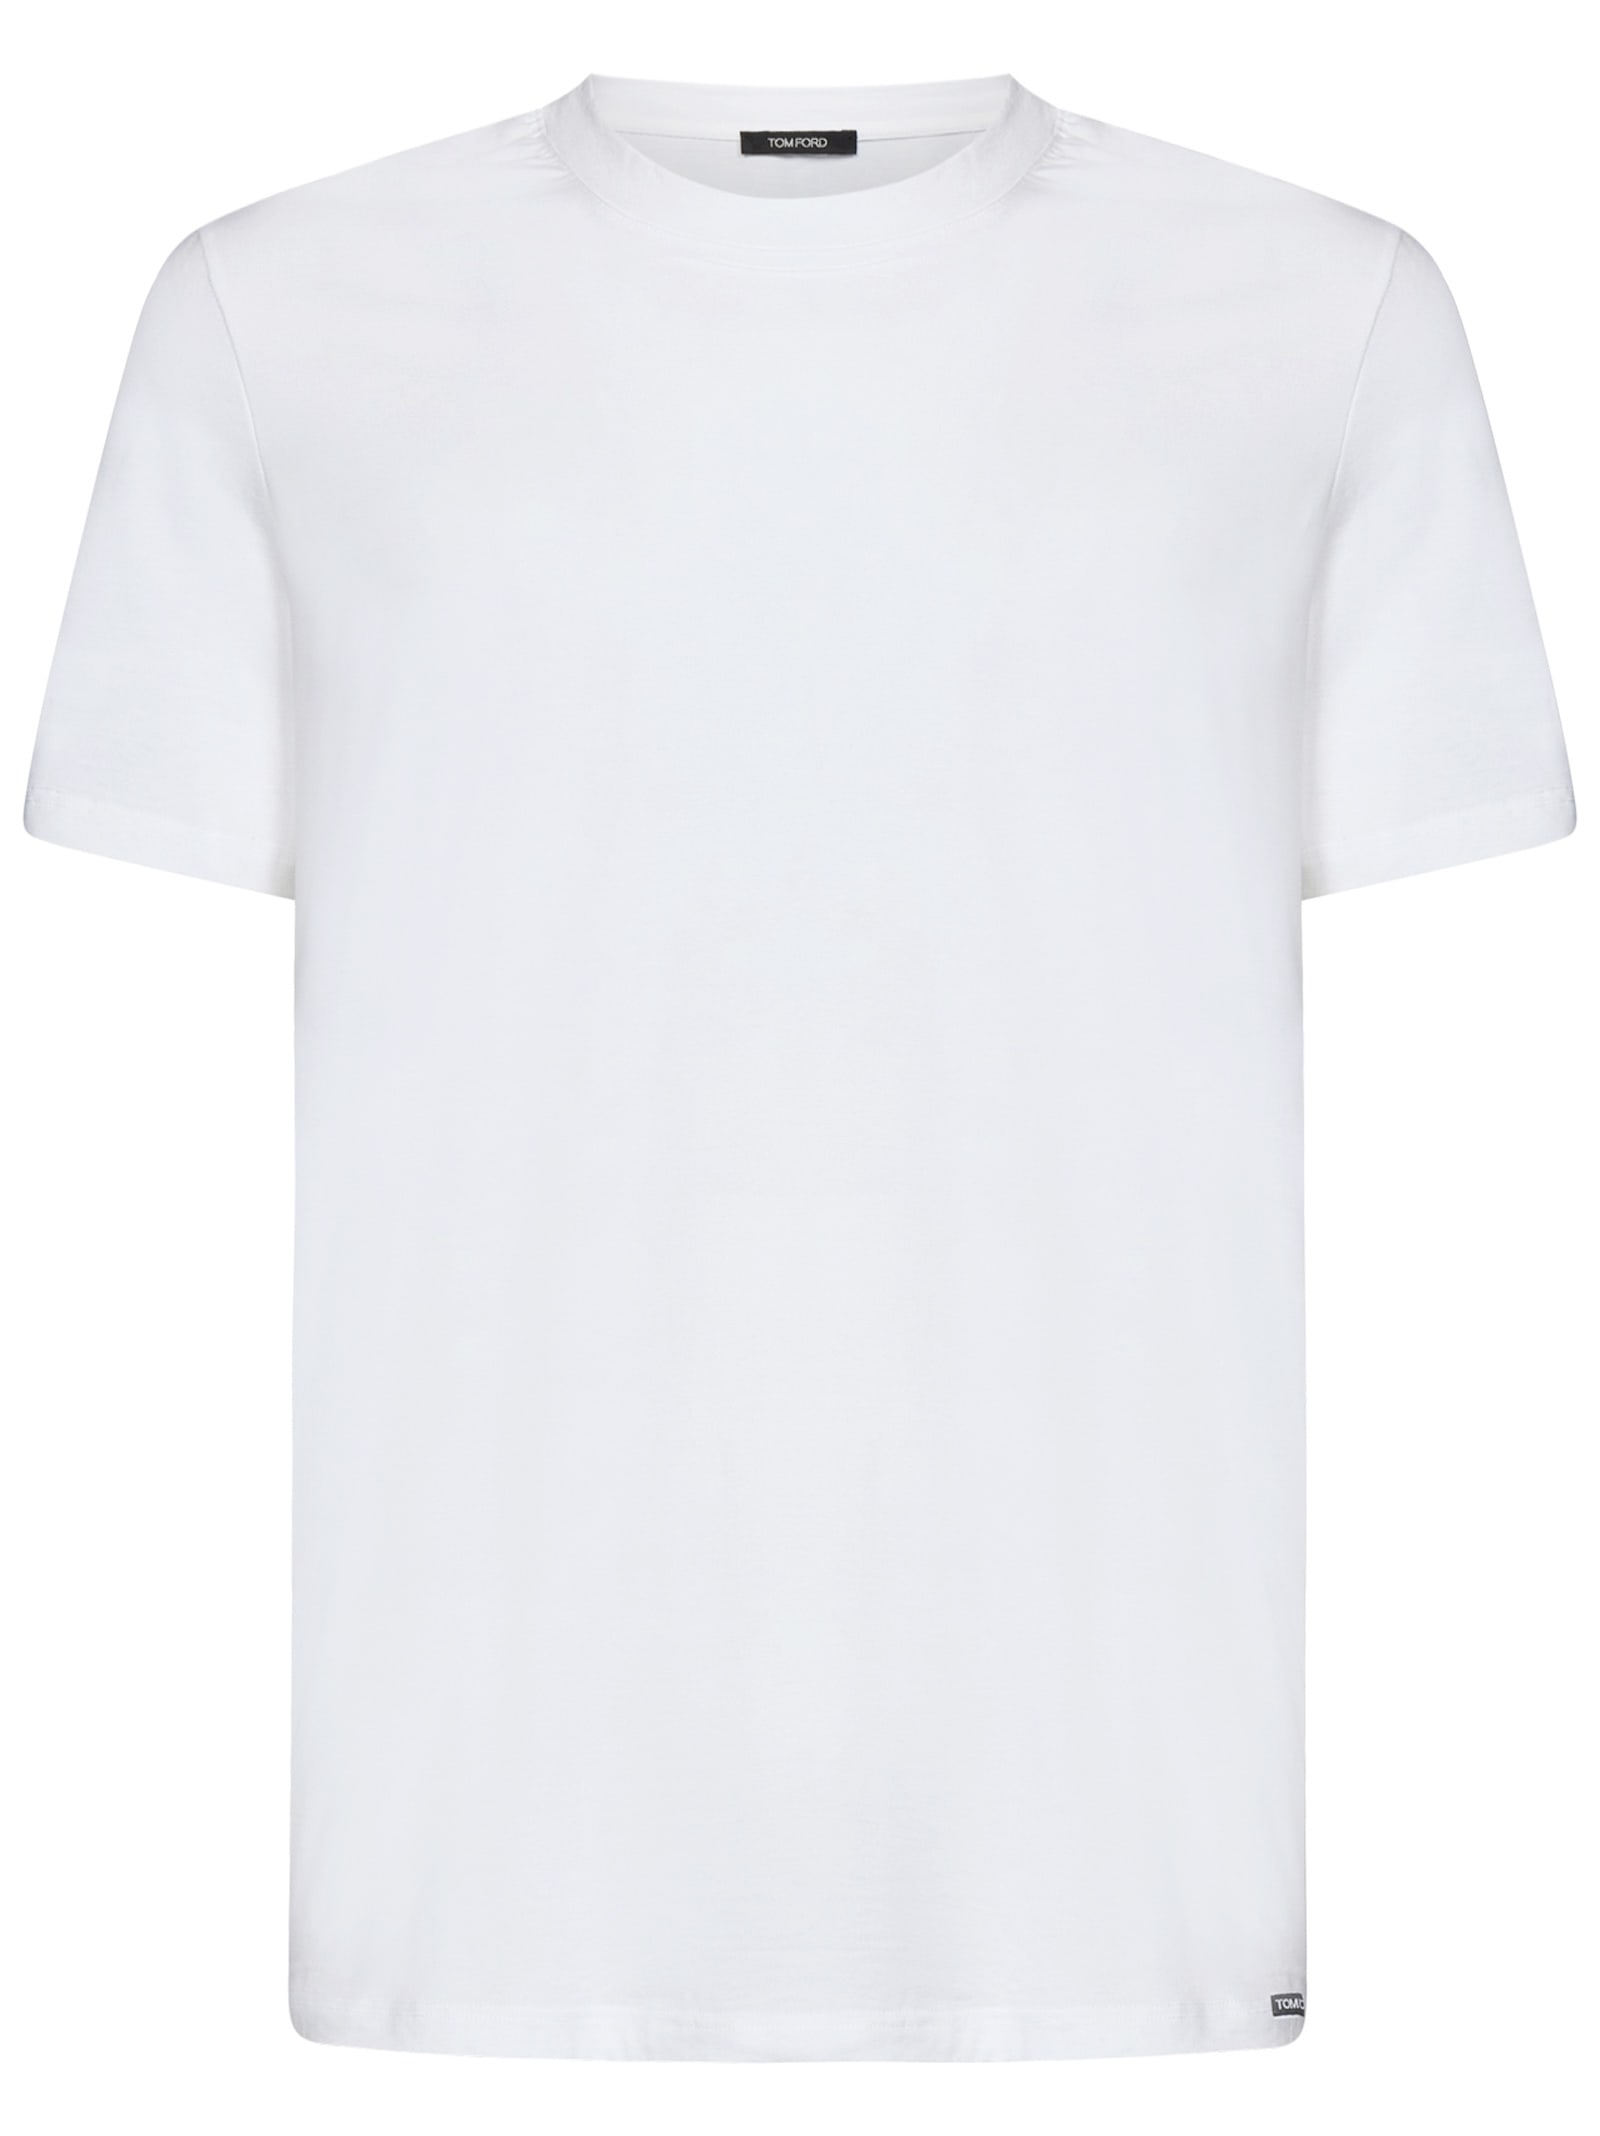 Tom Ford T-shirt | italist